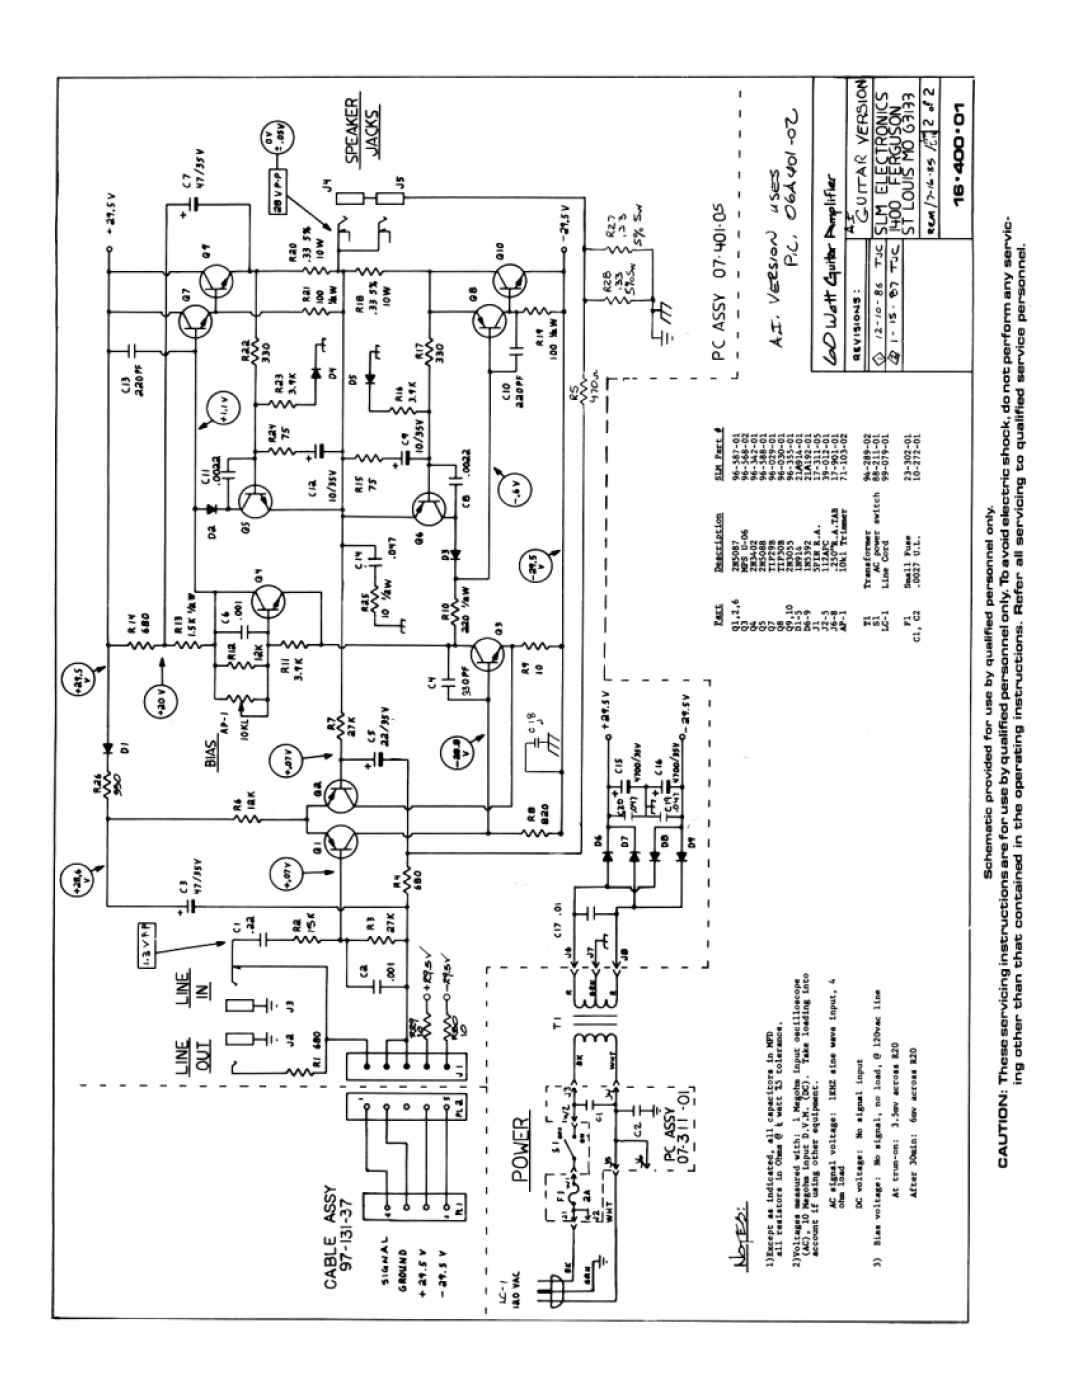 Crate Amplifiers B.60 manual 